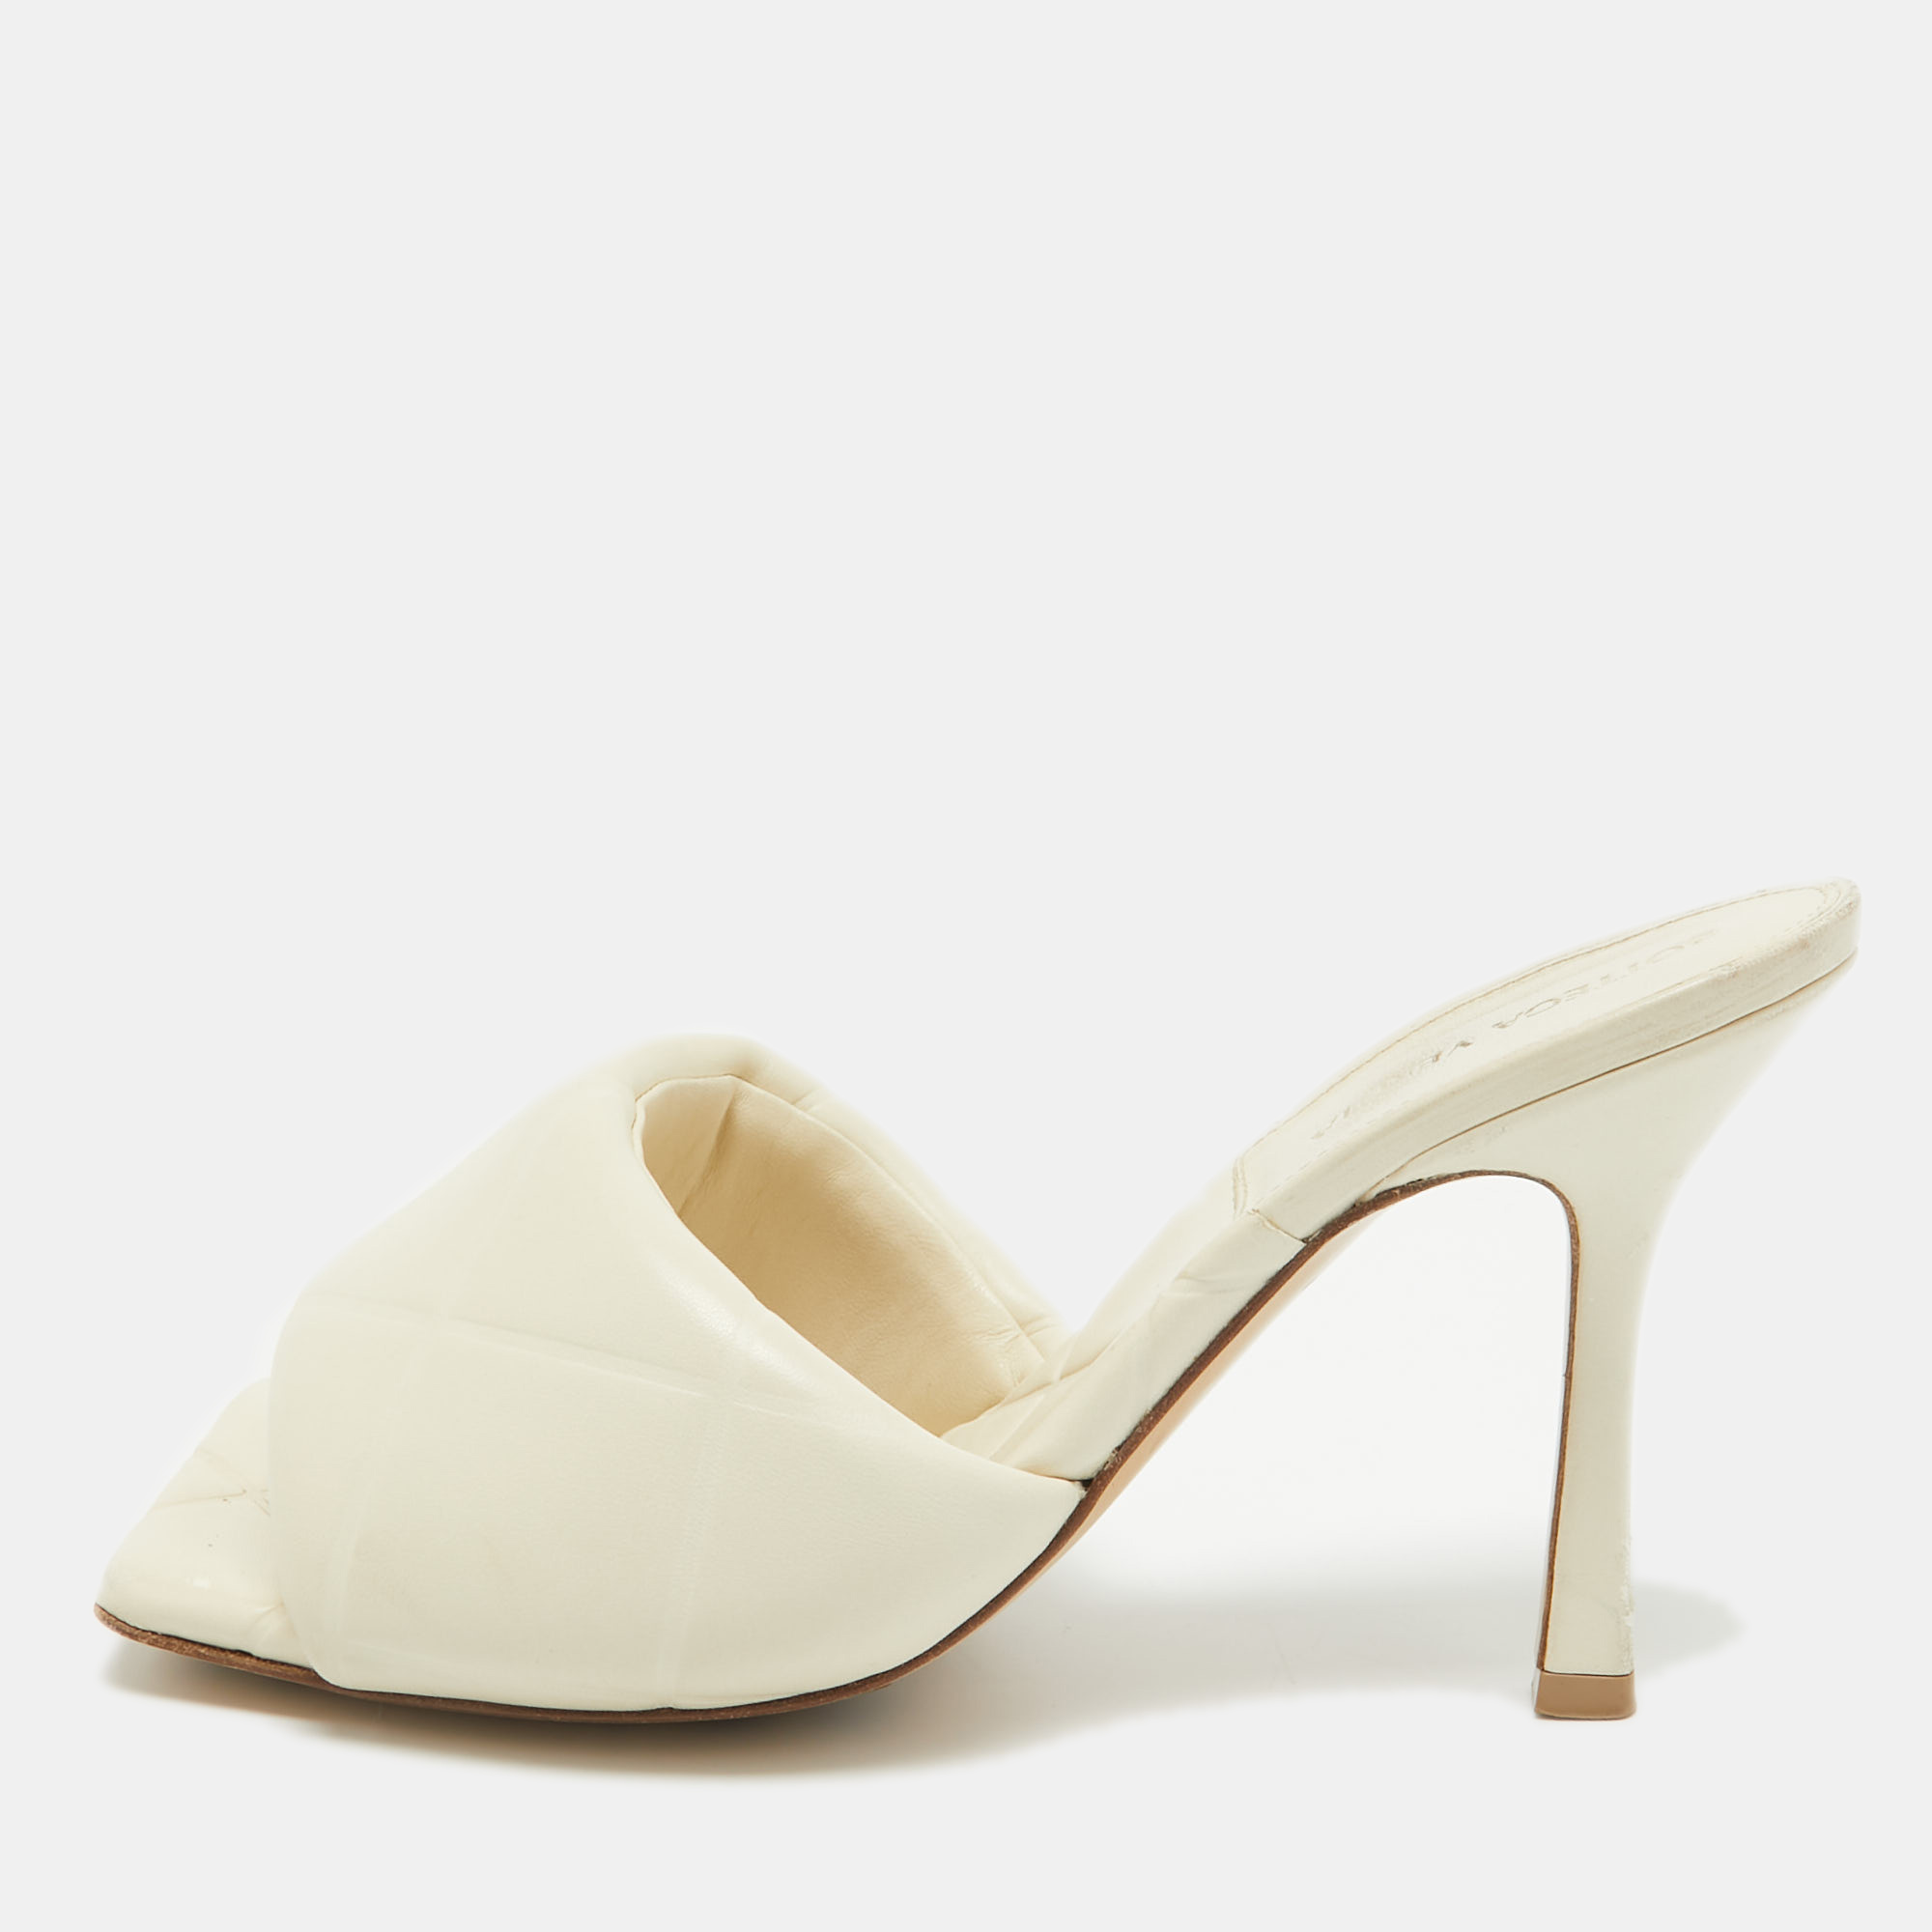 Bottega veneta white leather lido open toe slide sandals size 39.5